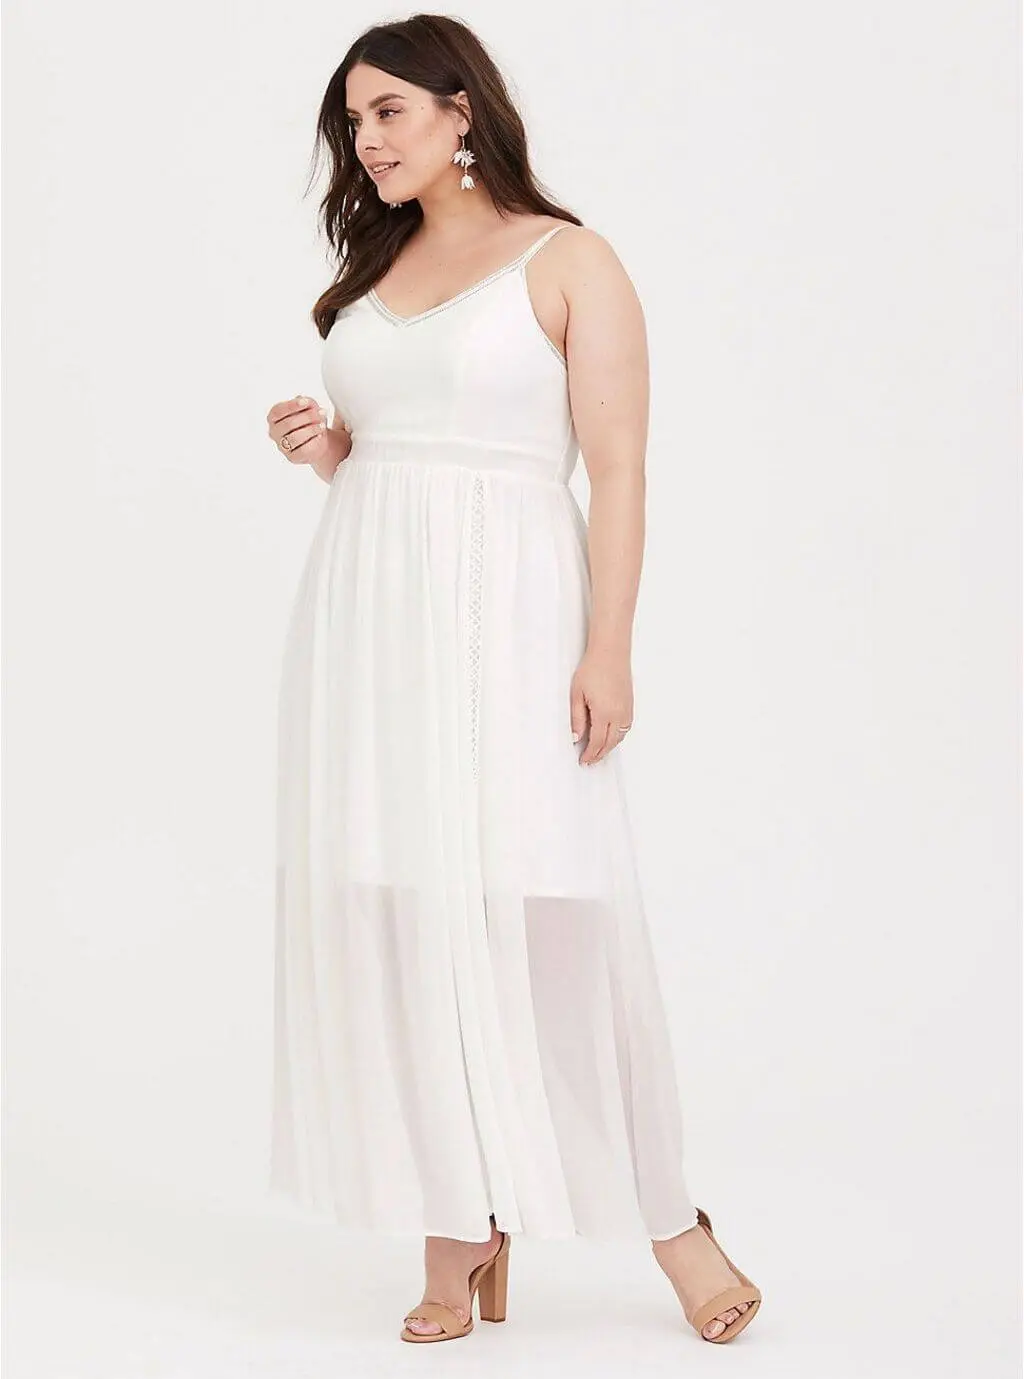 Off-White Strapless Maxi Long Dress